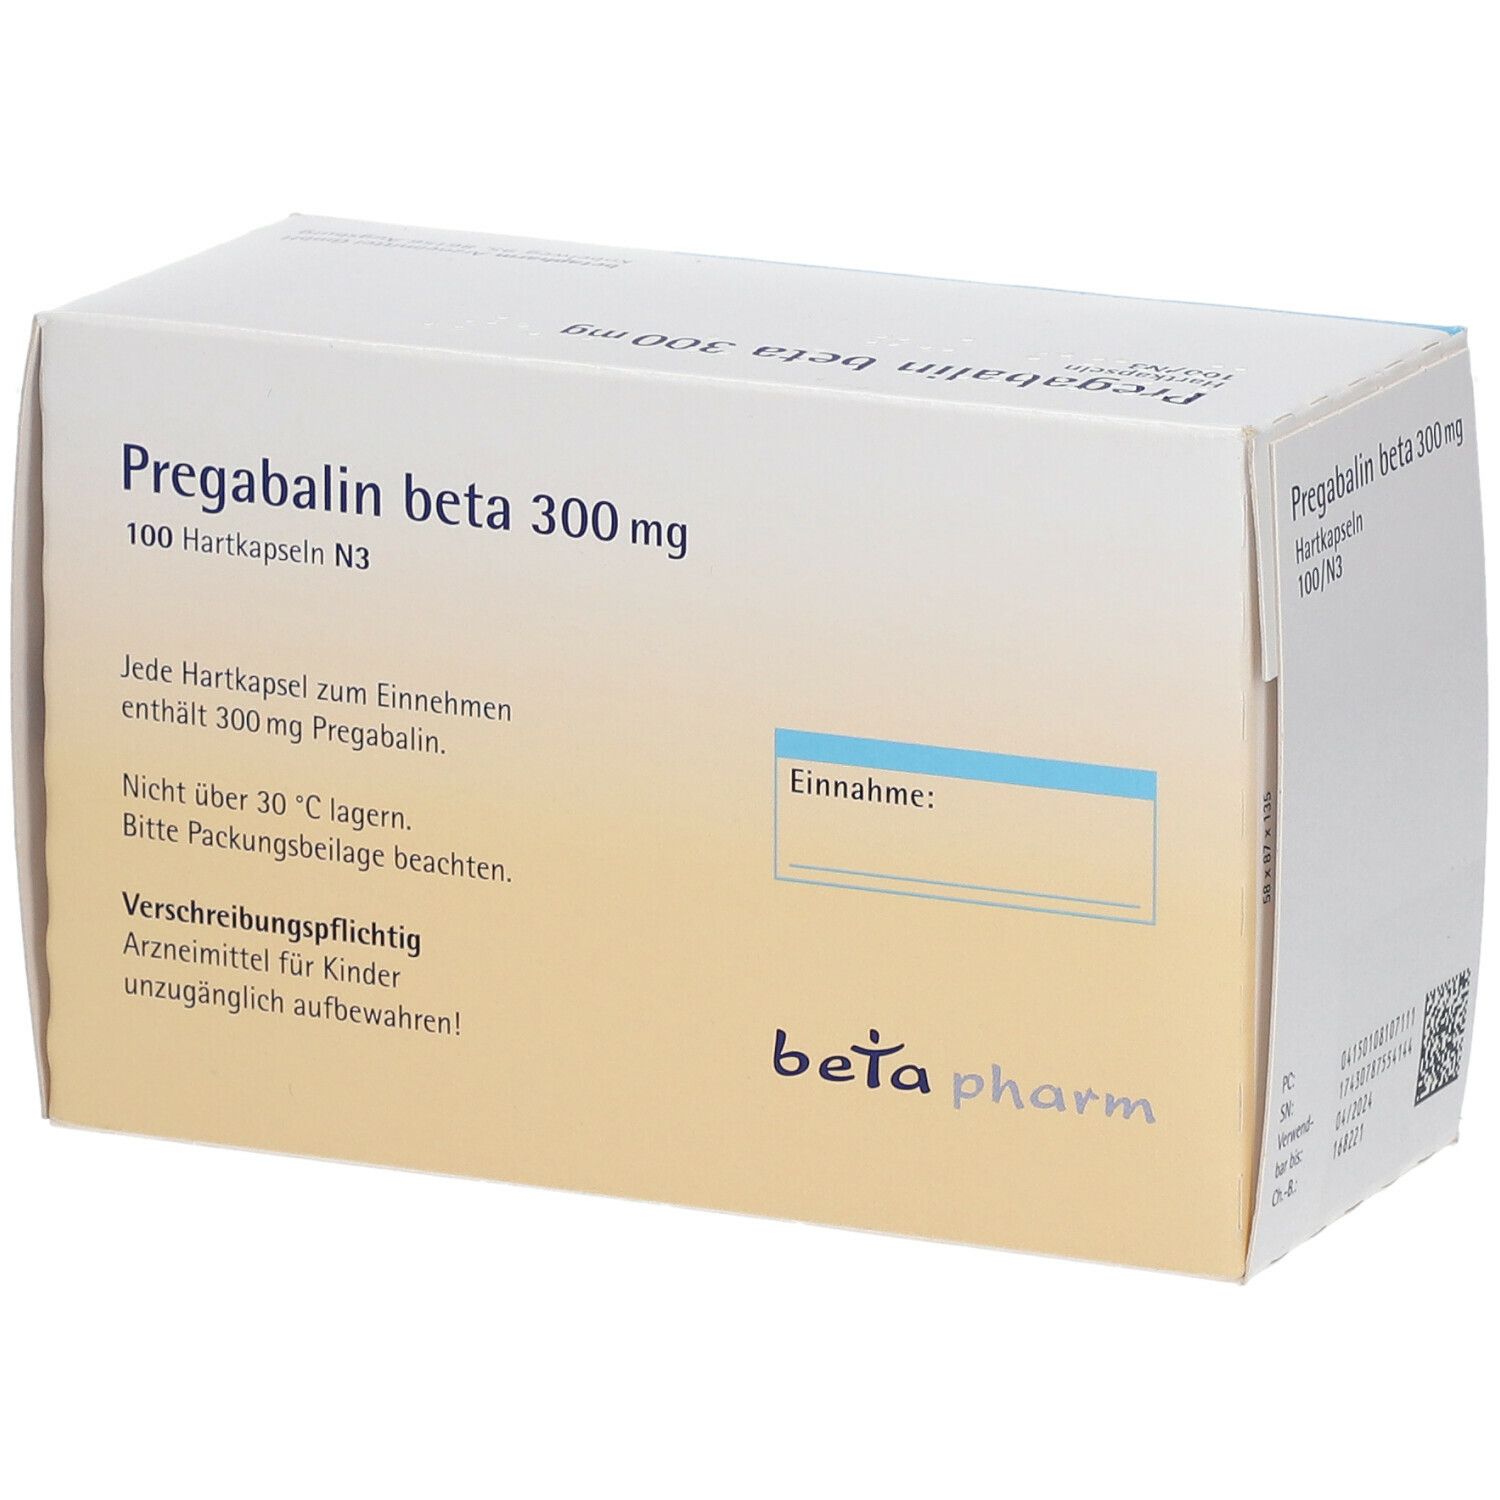 Pregabalin beta 300 mg